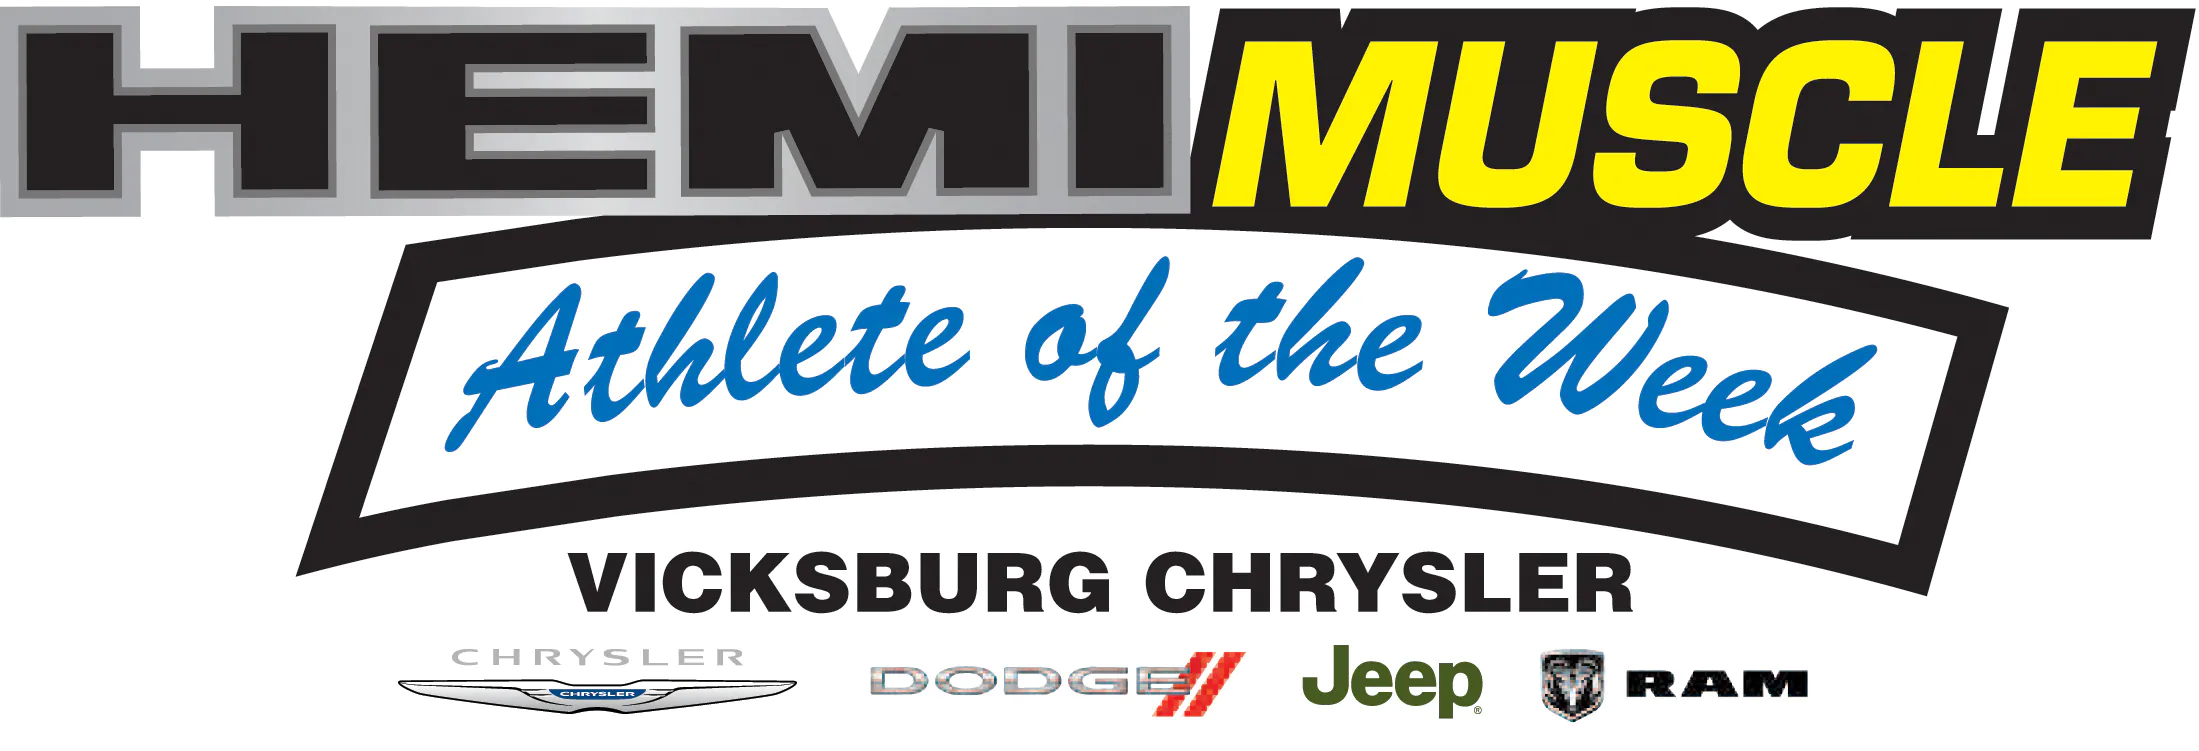 HEMI Muscle Athletes of the Week at Vicksburg Chrysler Dodge Jeep Ram MI in Vicksburg MI